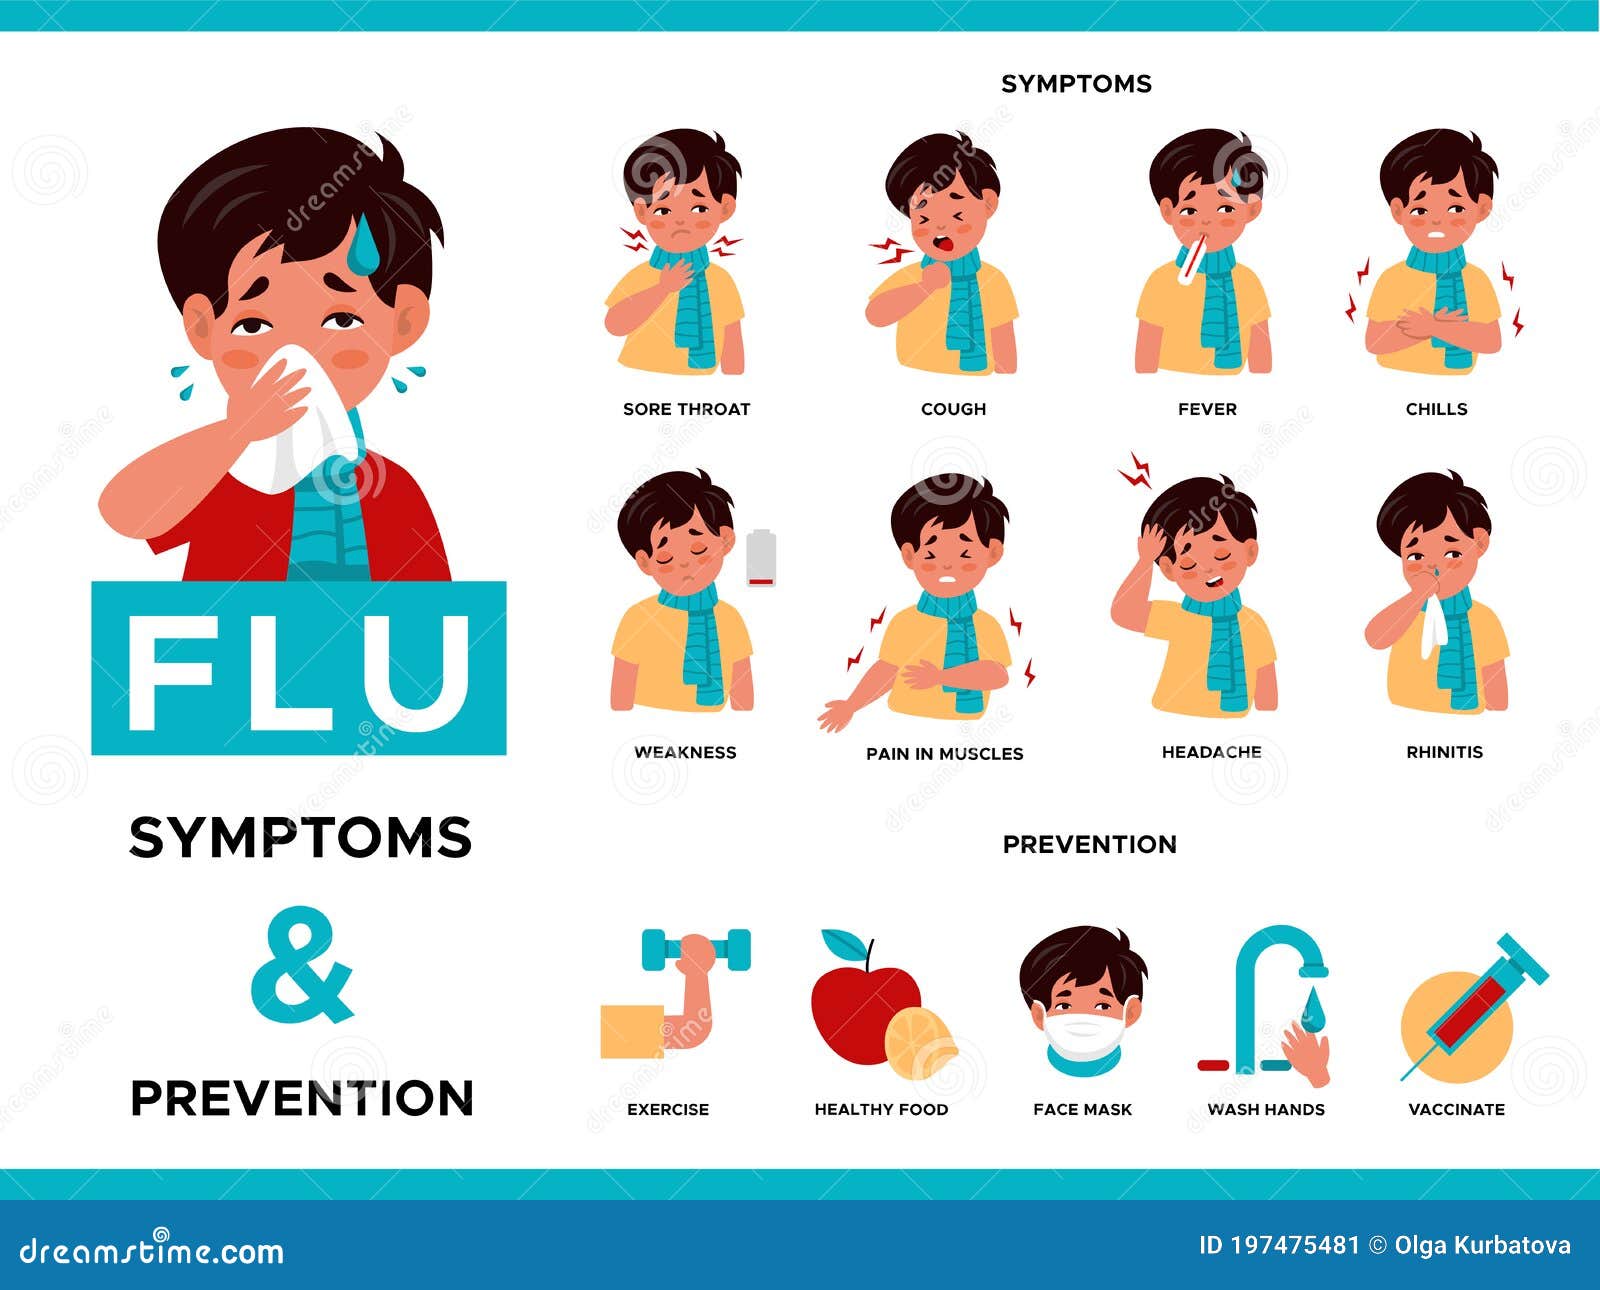 Symptoms of influenza in children doctorvisit